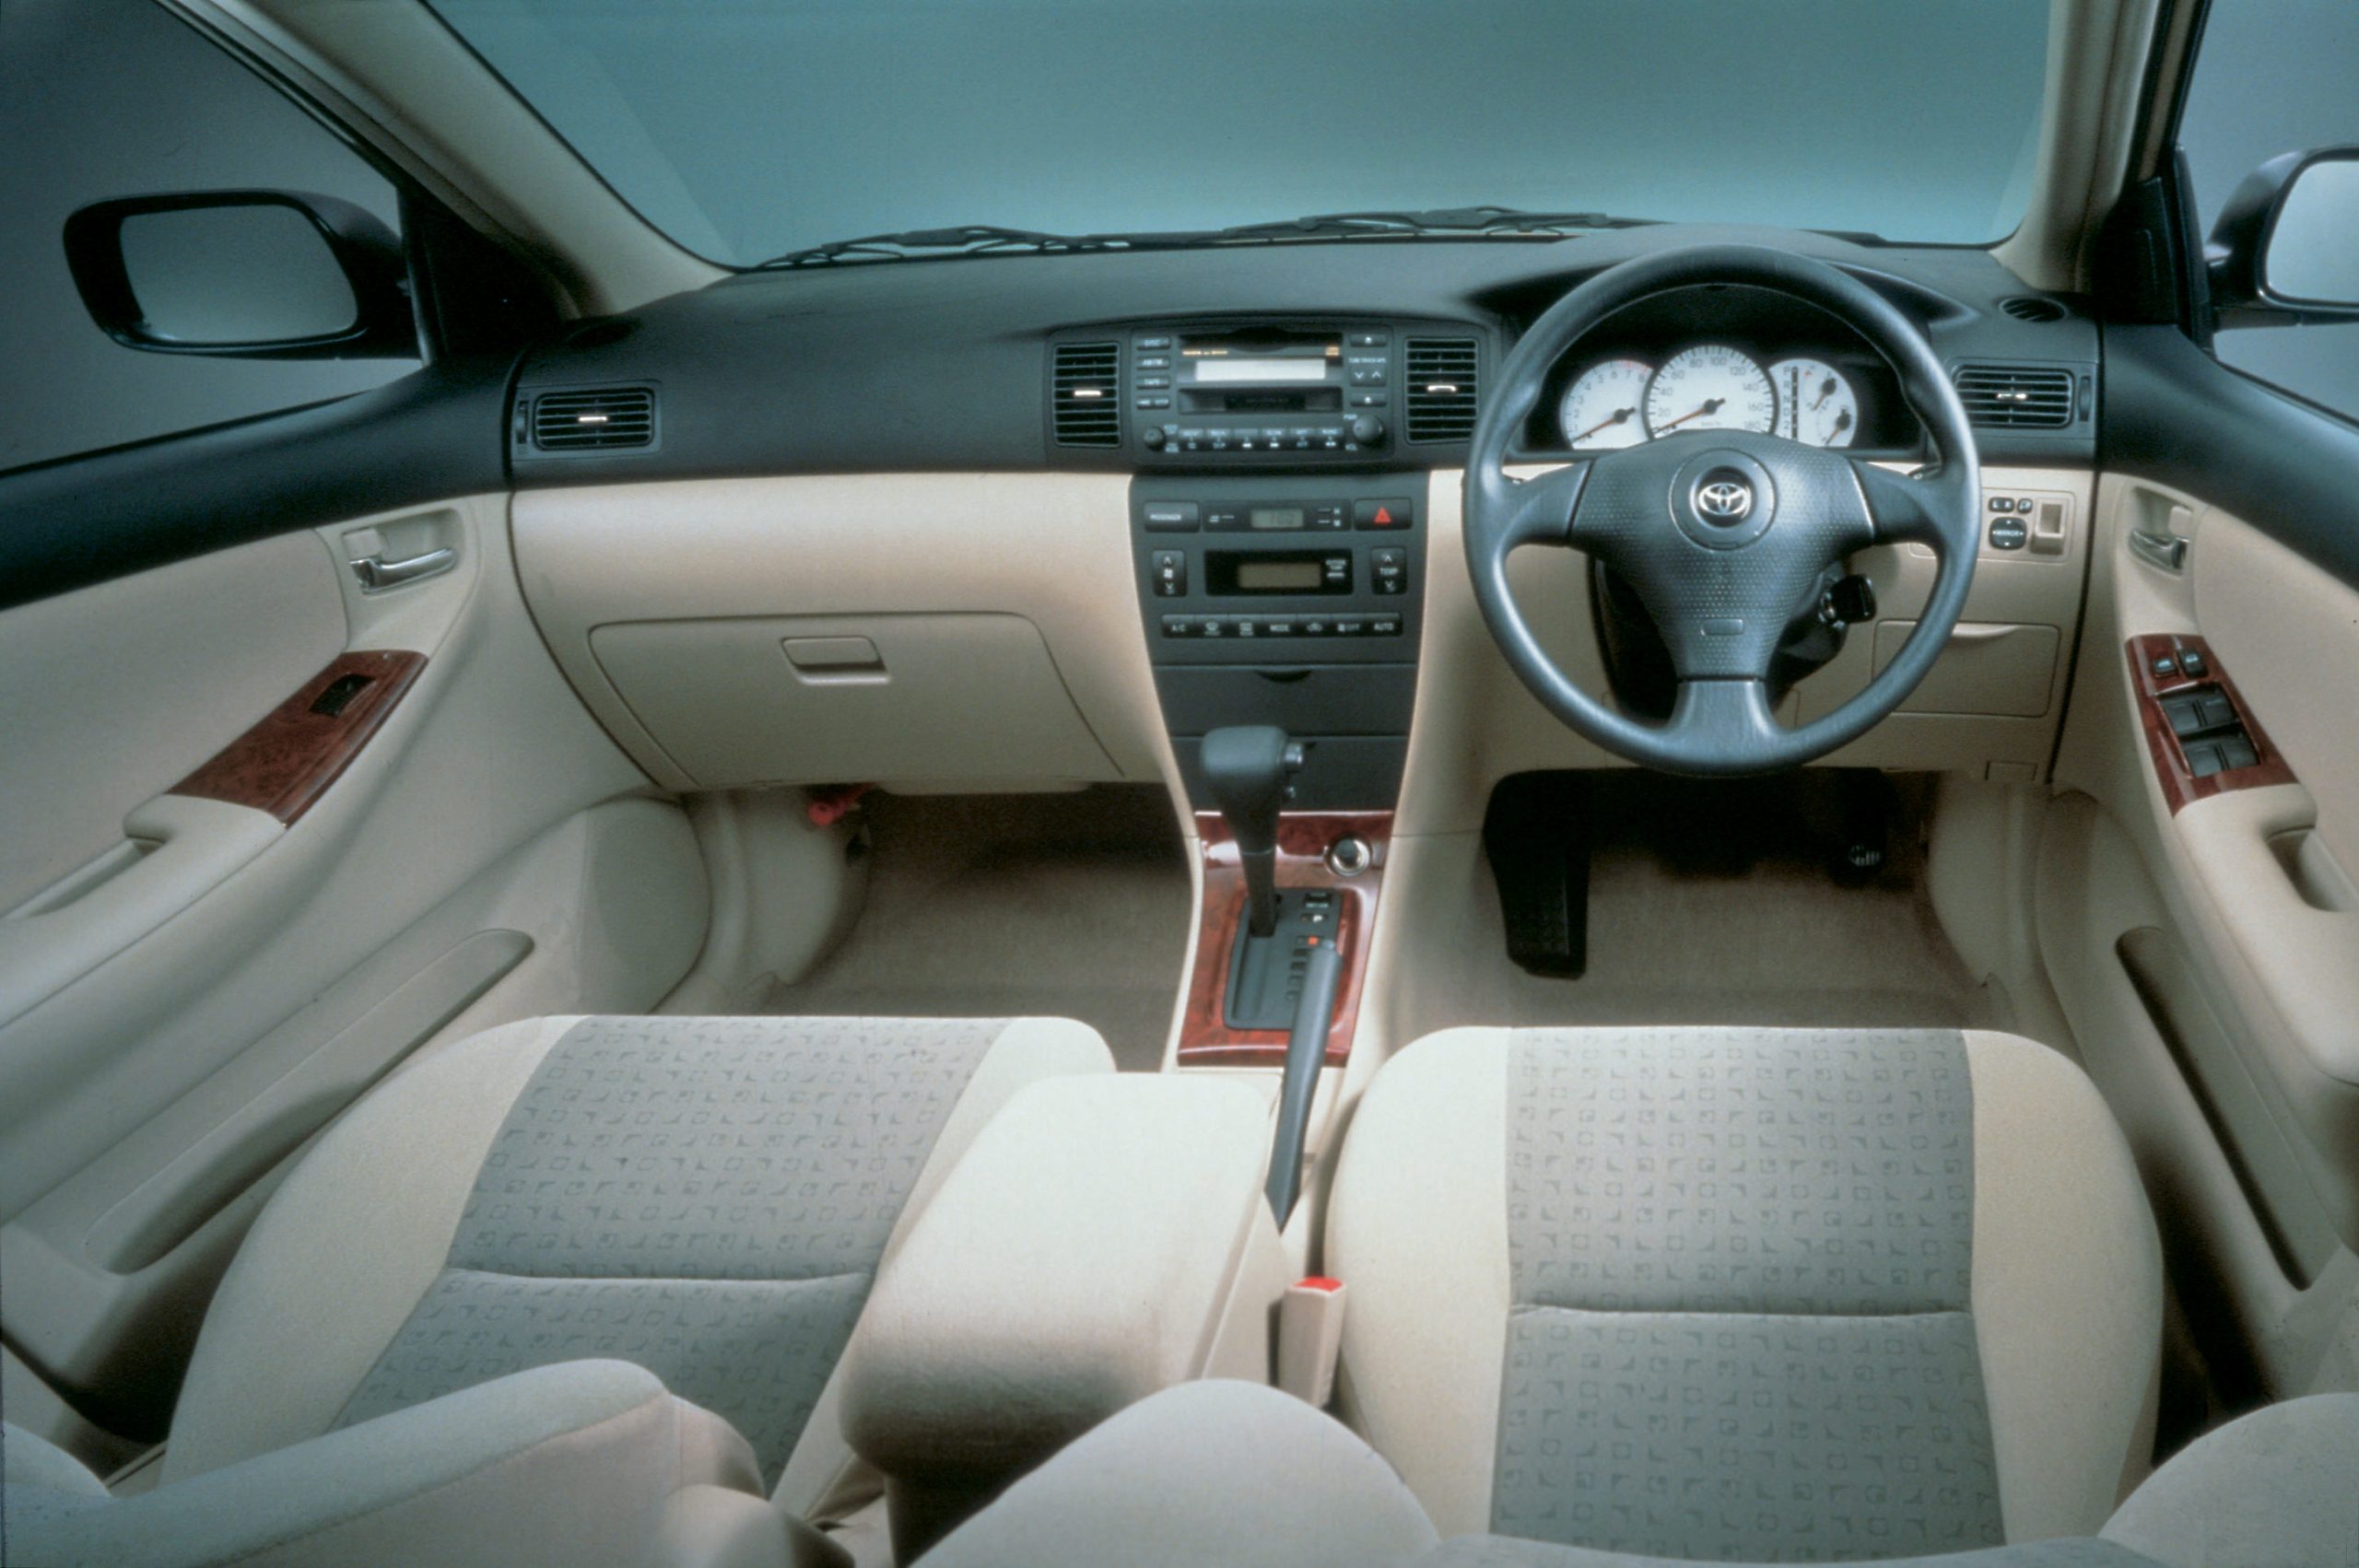 Toyota Runx interior - Cockpit